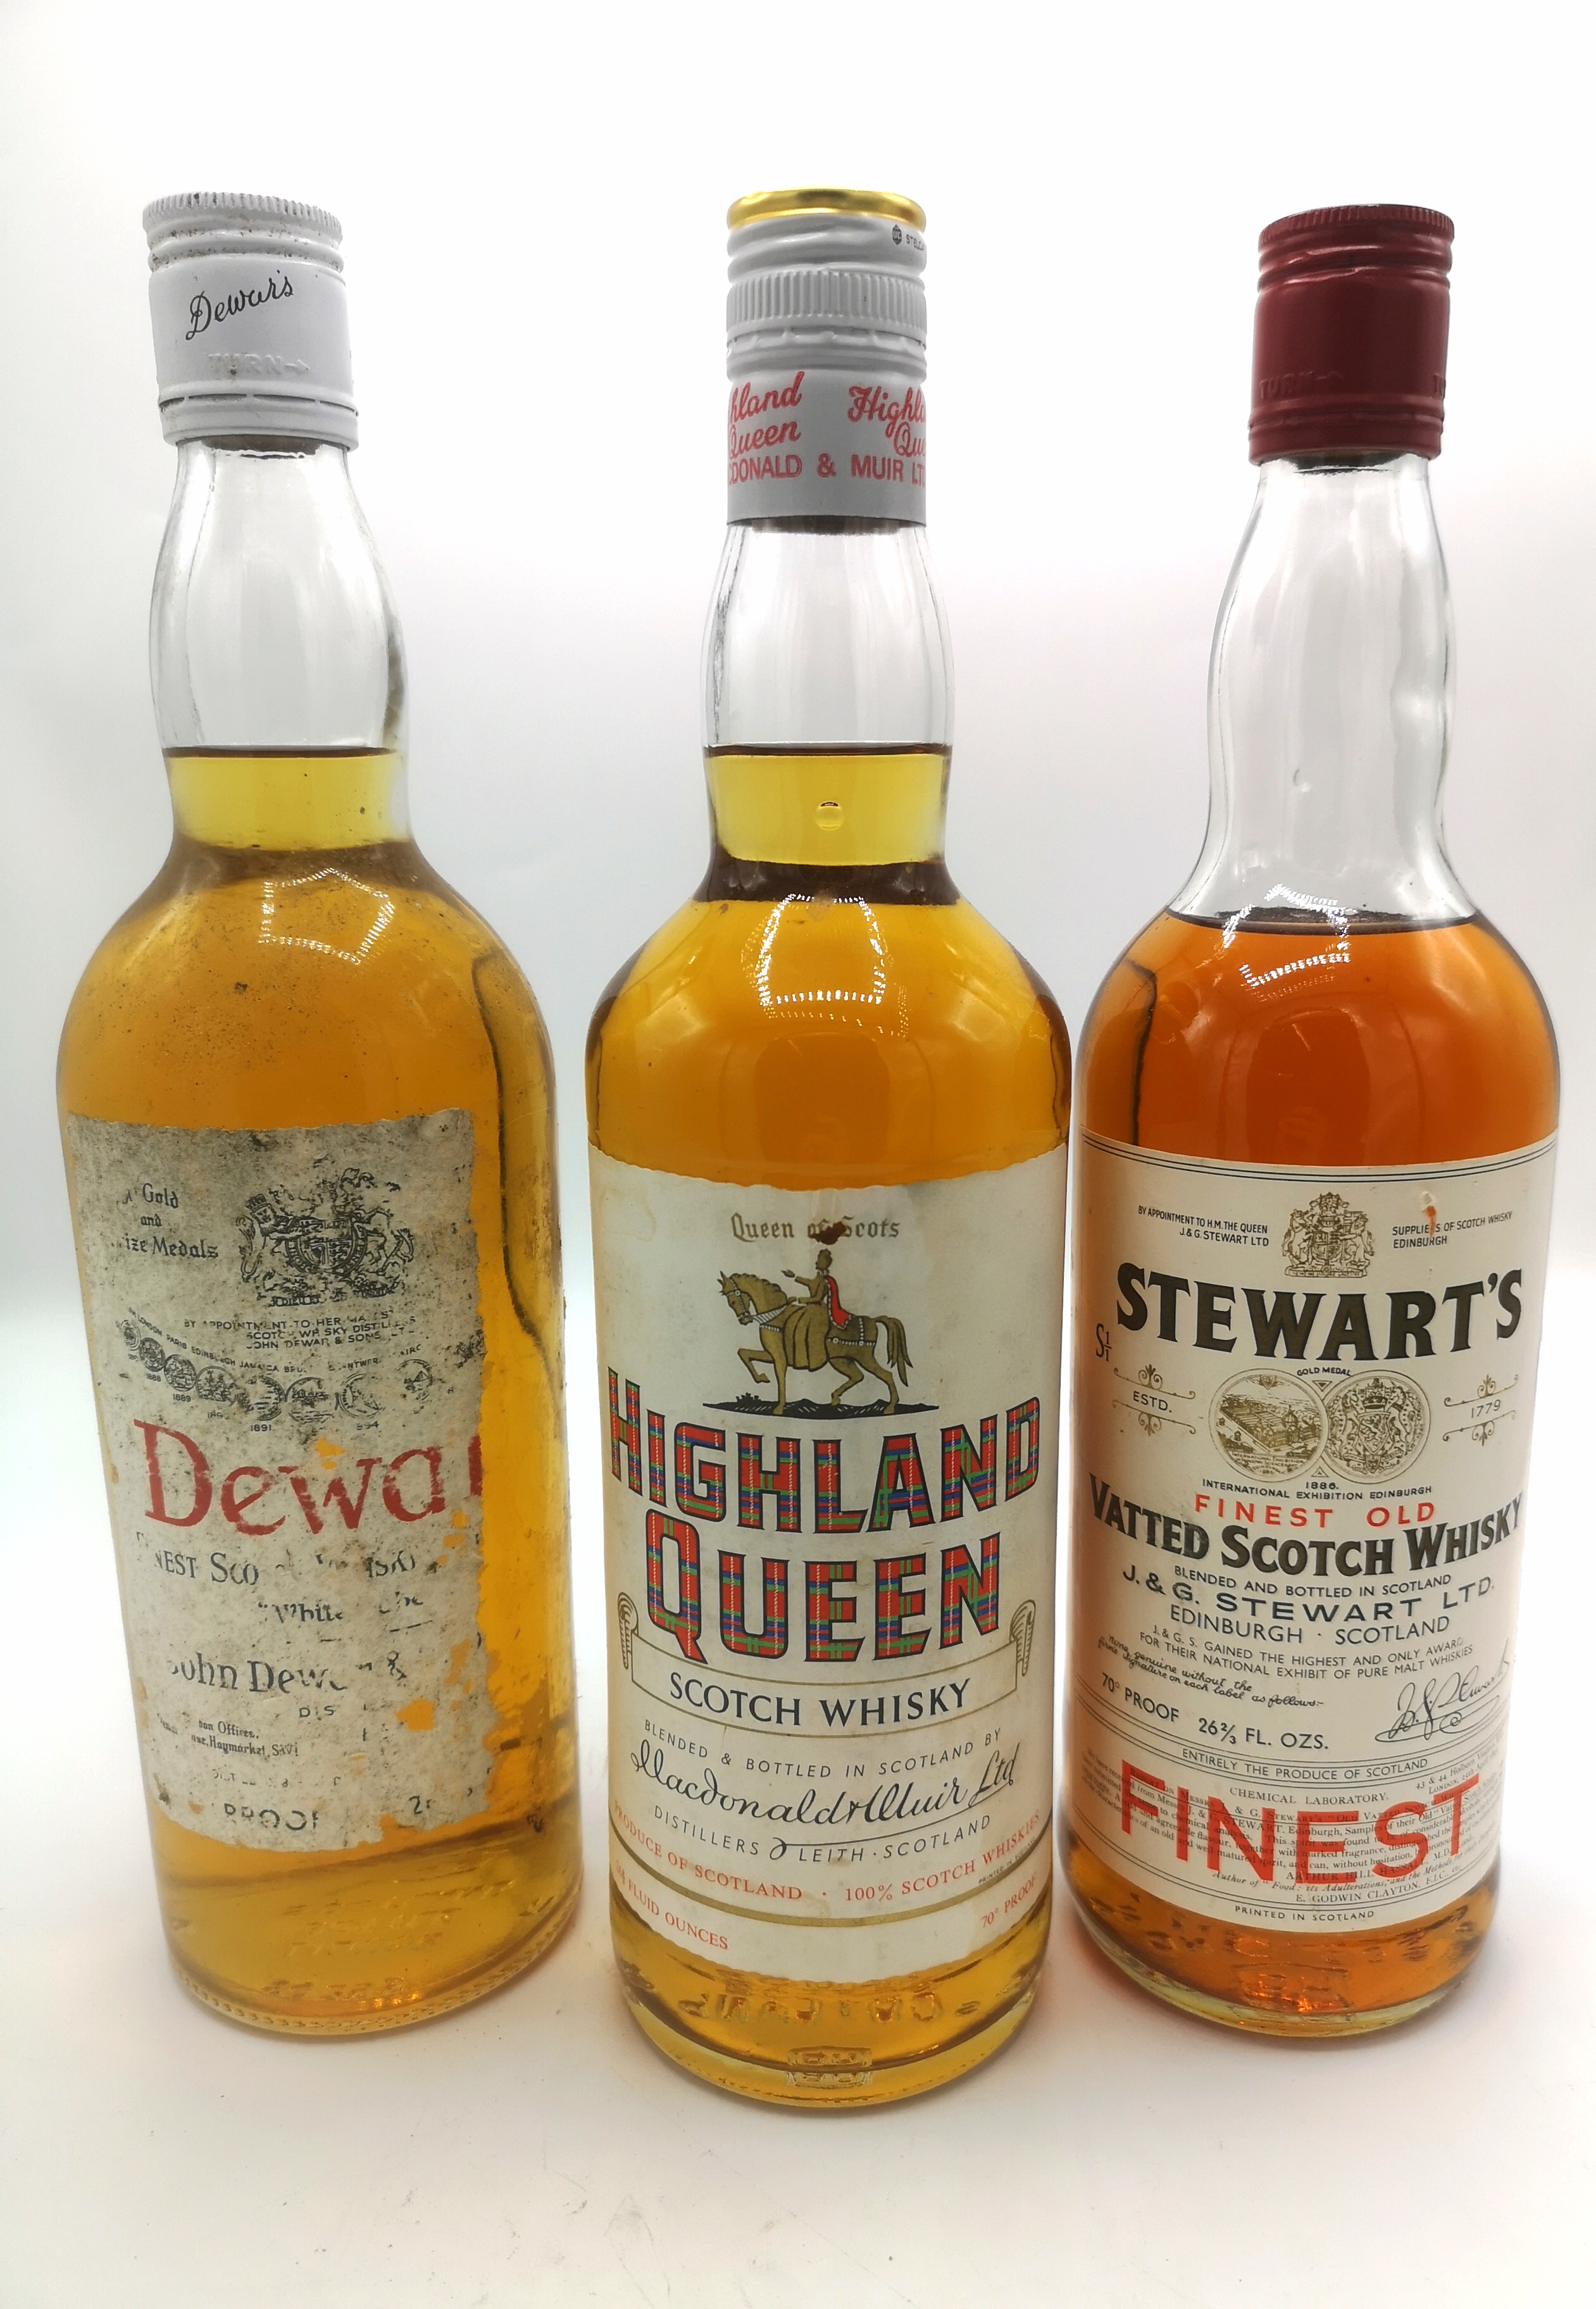 Three bottles of Scotch whisky